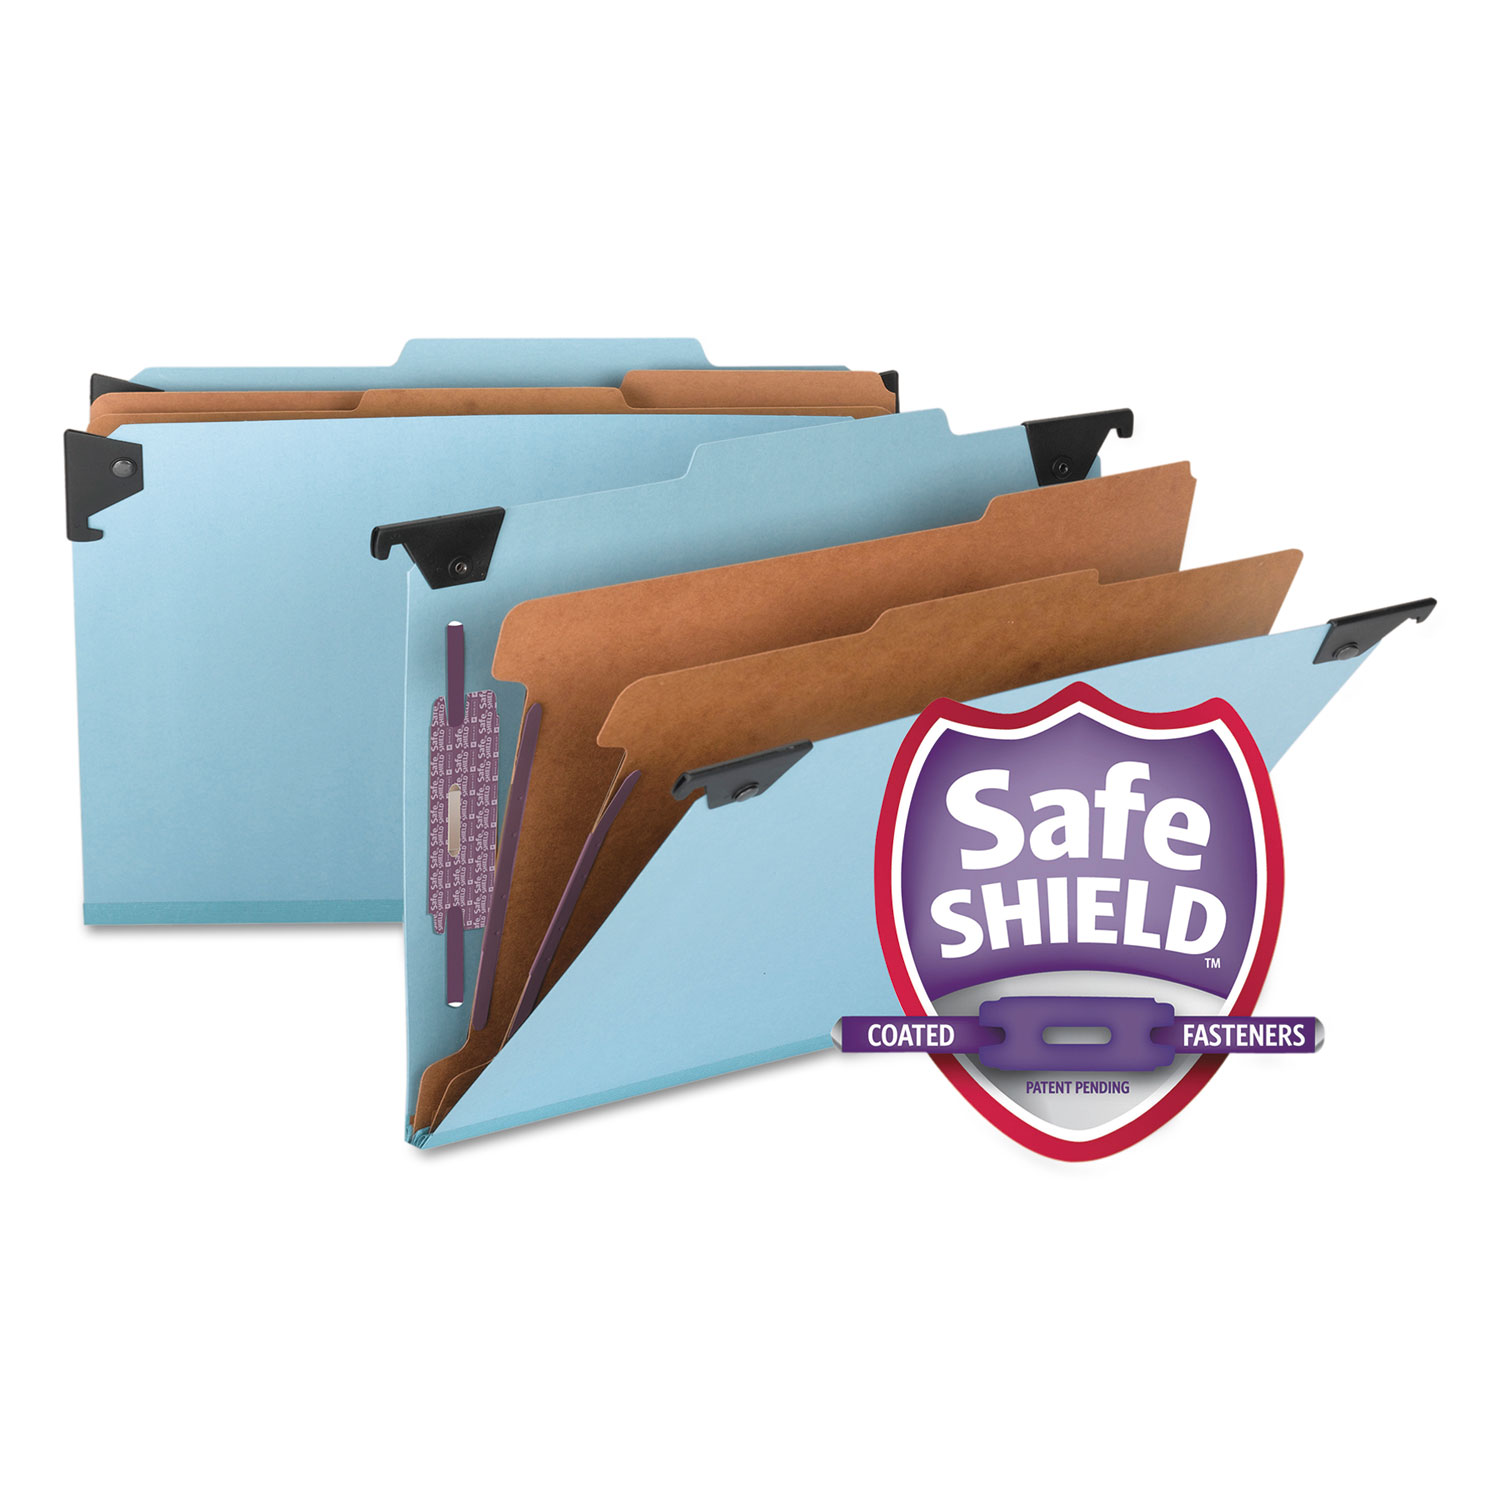  Smead 65165 FasTab Hanging Pressboard Classification Folders, Legal Size, 2 Dividers, Blue (SMD65165) 